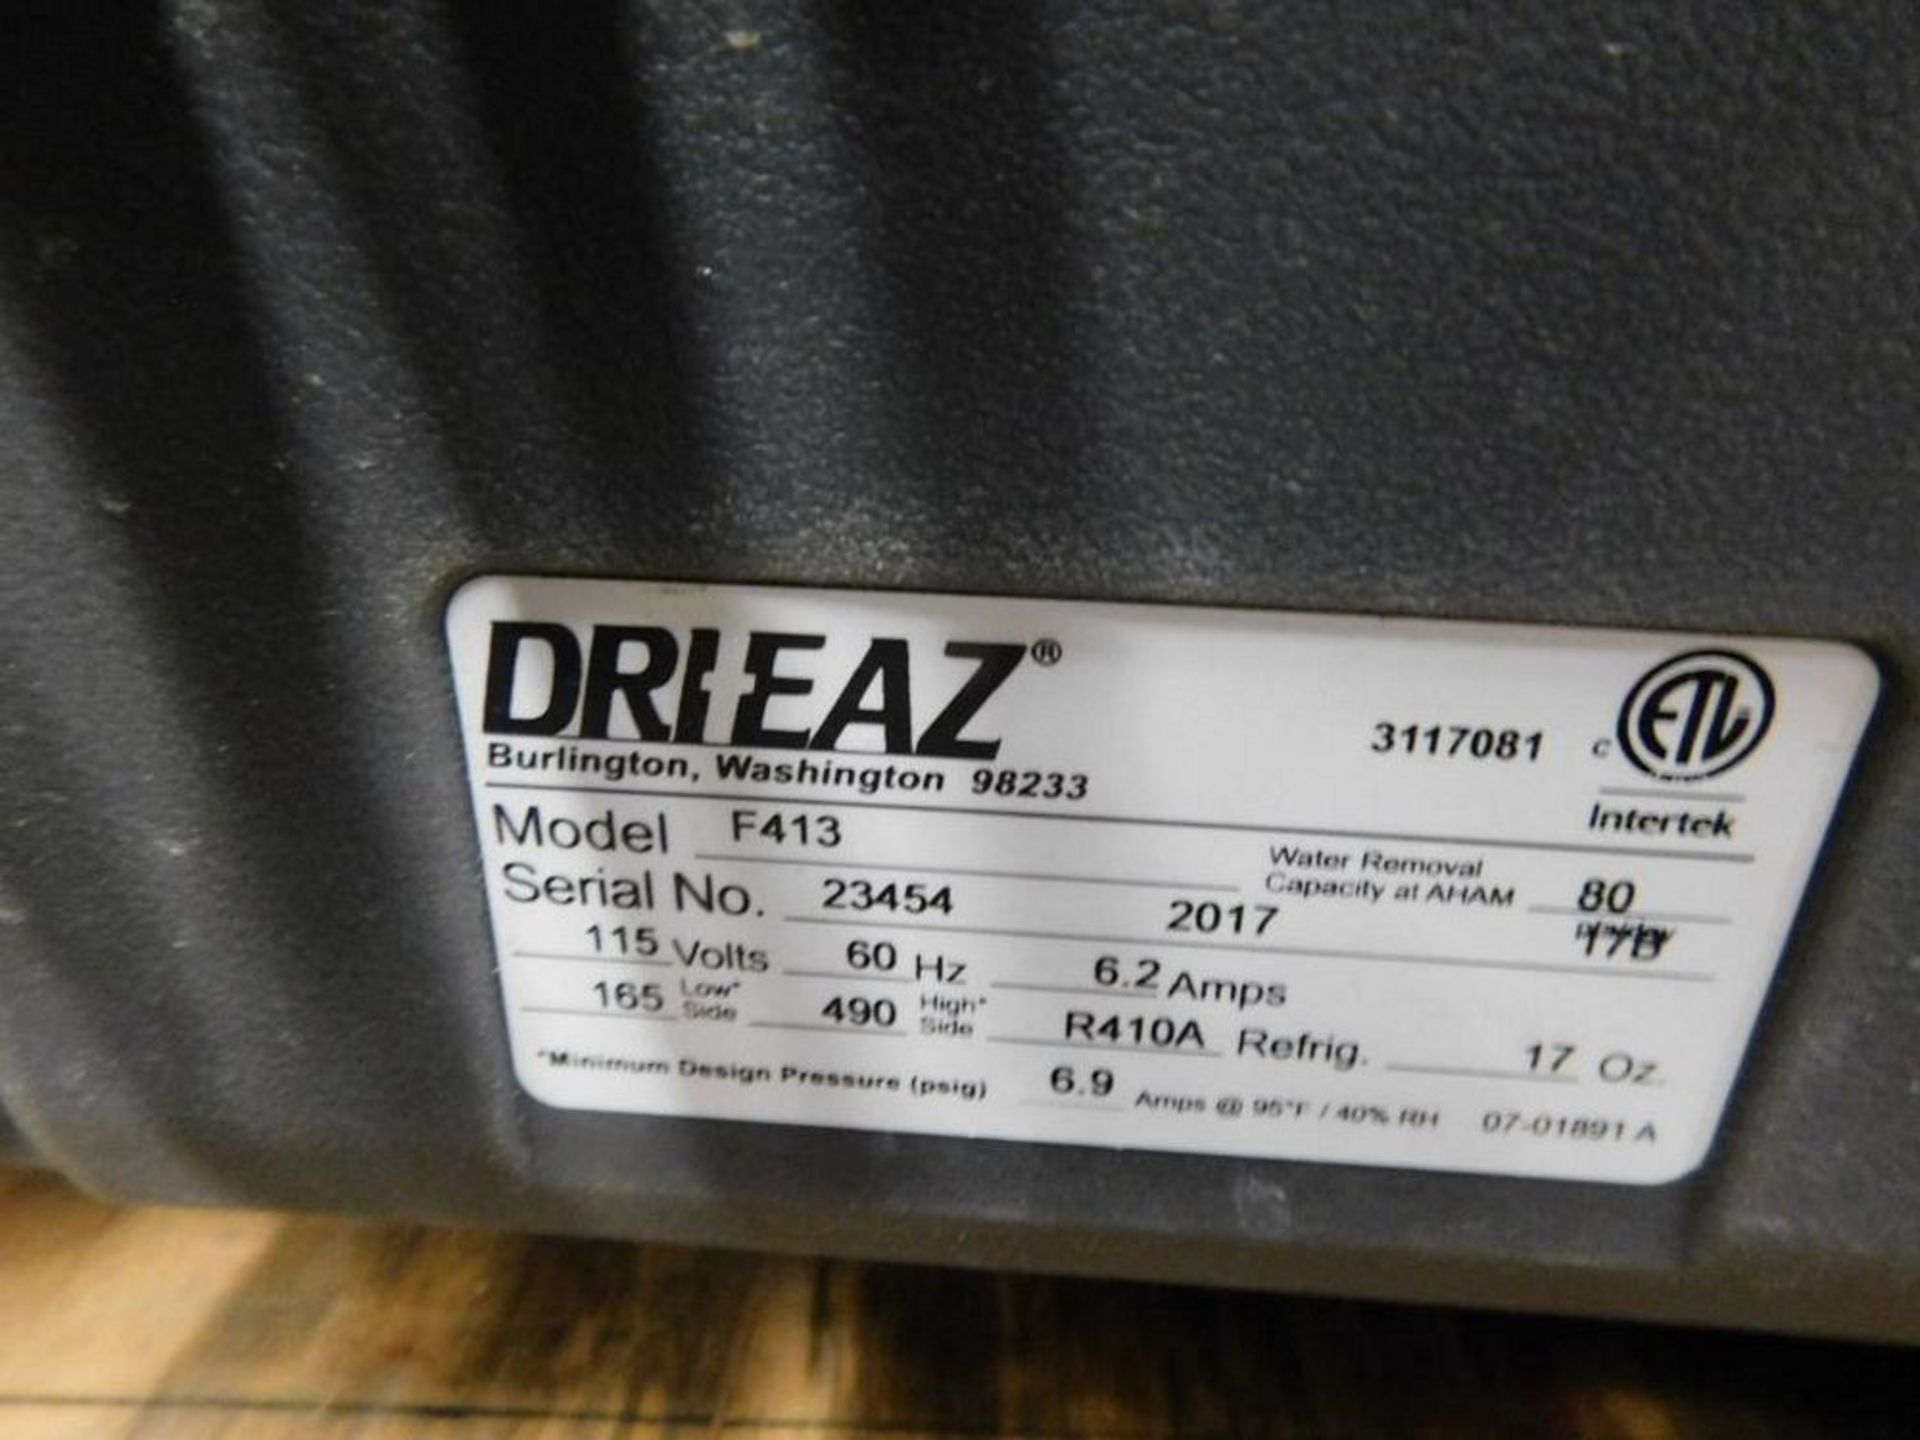 Dri-Eaz Revolution LGR Dehumidifier (LOCATION: 318 N. Milwaukee Ave., Wheeling, IL 60090) - Image 4 of 4